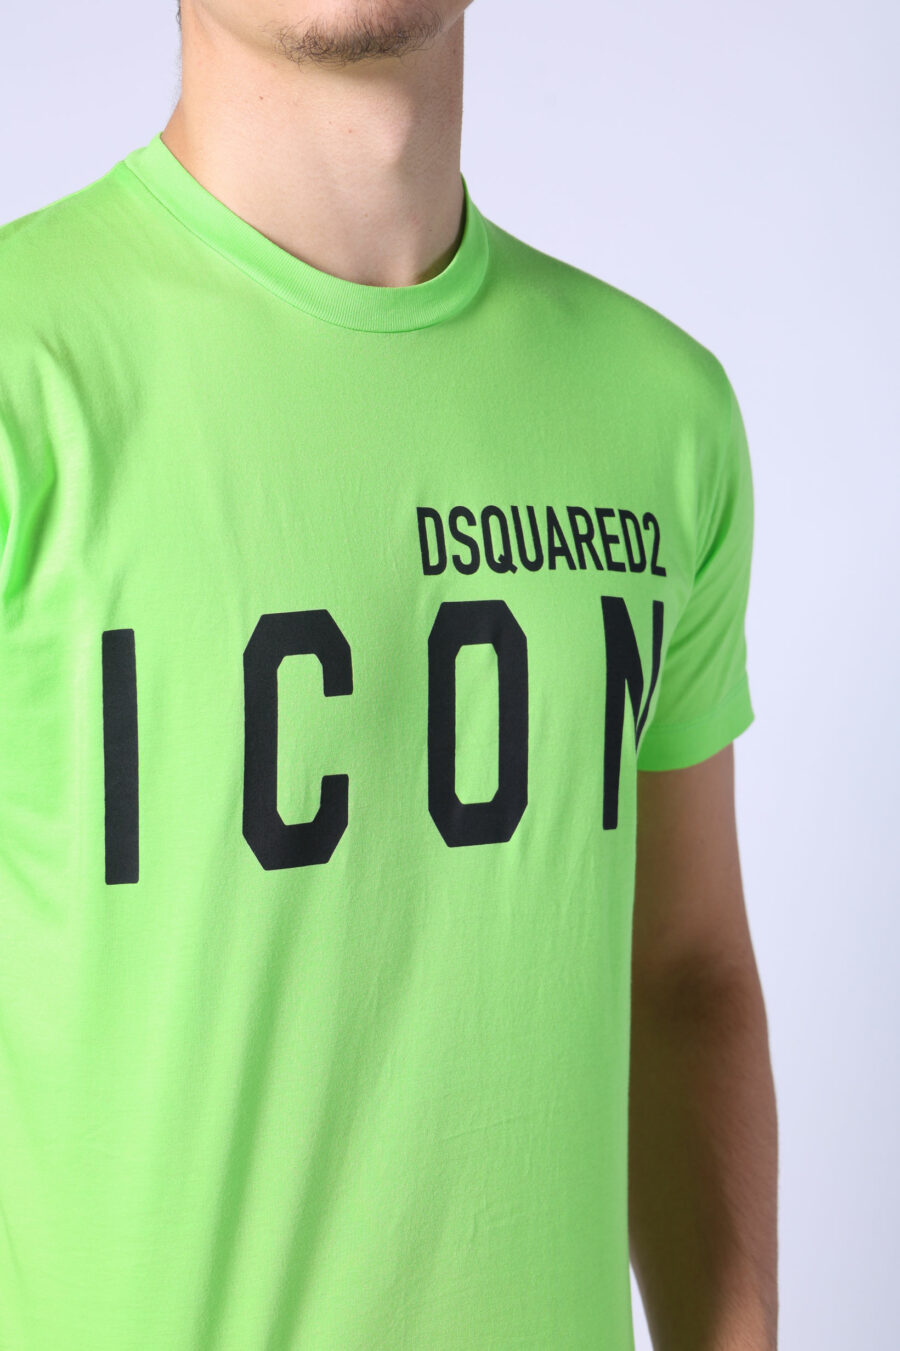 T-shirt vert citron avec maxilogo "icon" noir - Untitled Catalog 05396